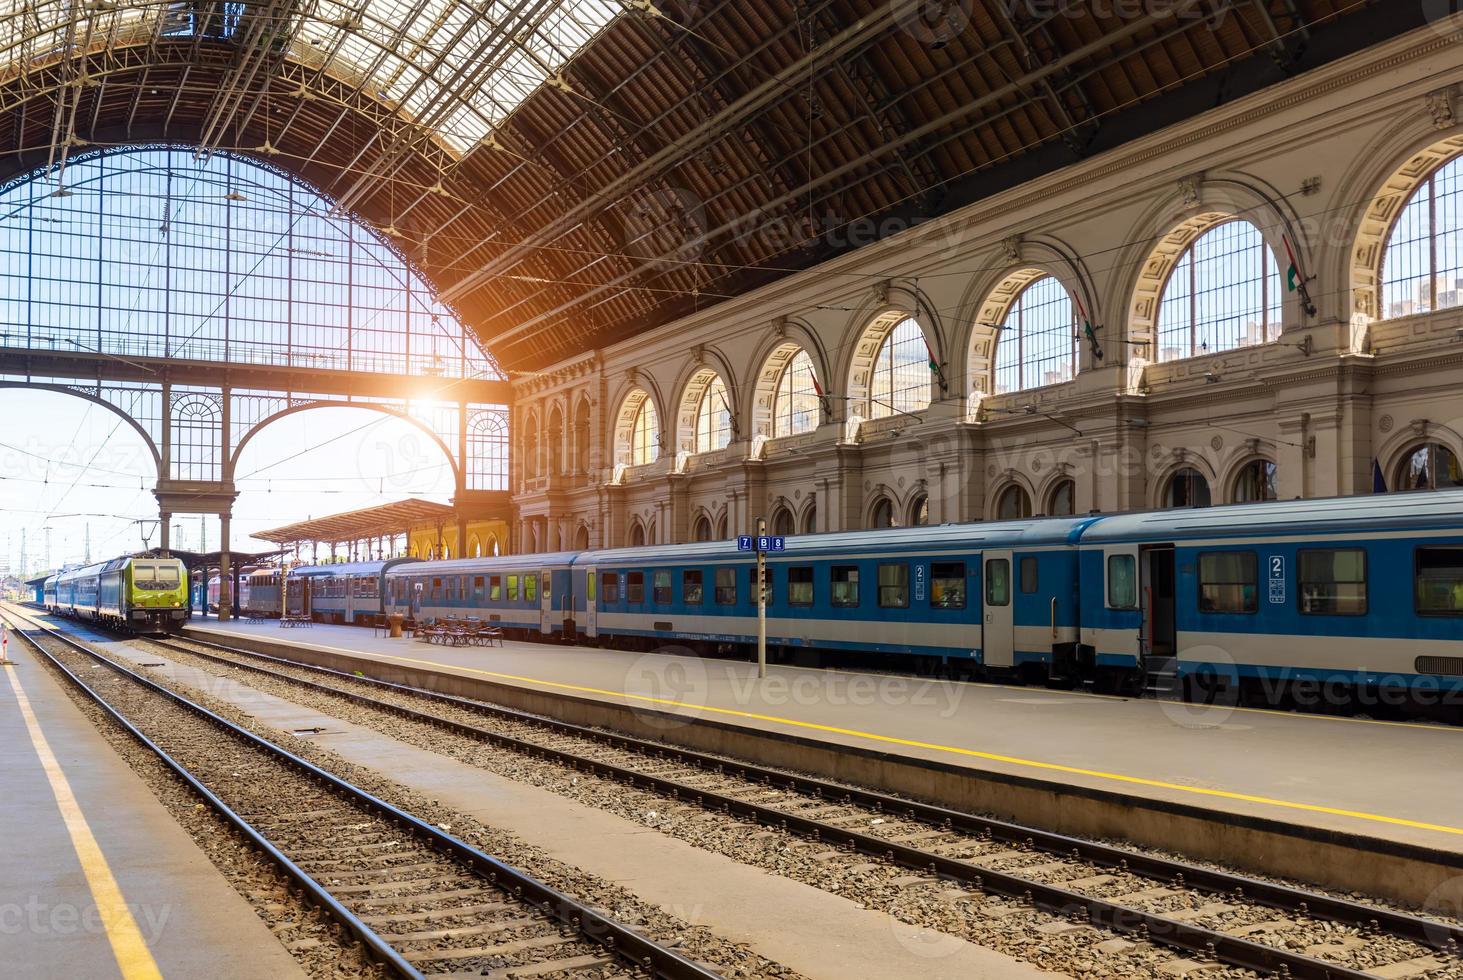 ungern budapest huvud central tåg station tjänande turism mellan större Europa städer foto